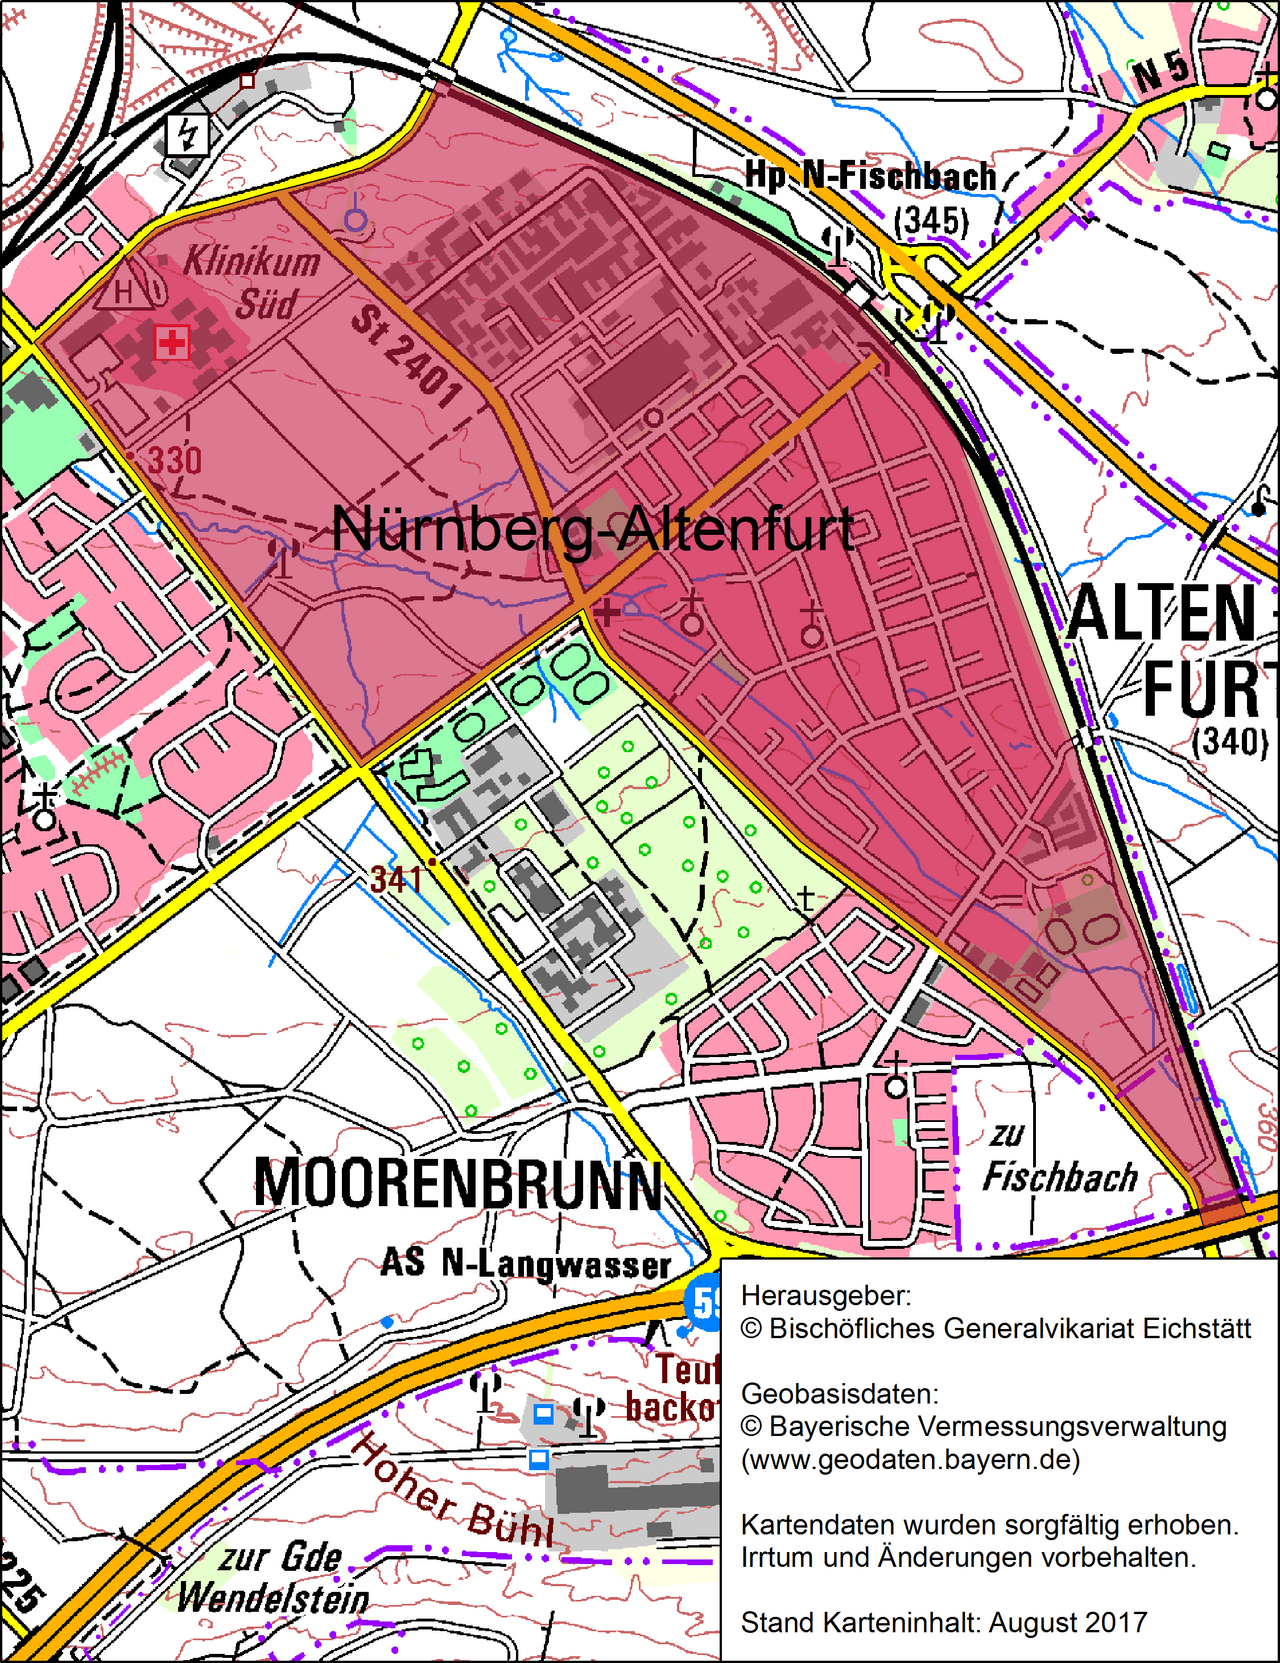 Altenfurt